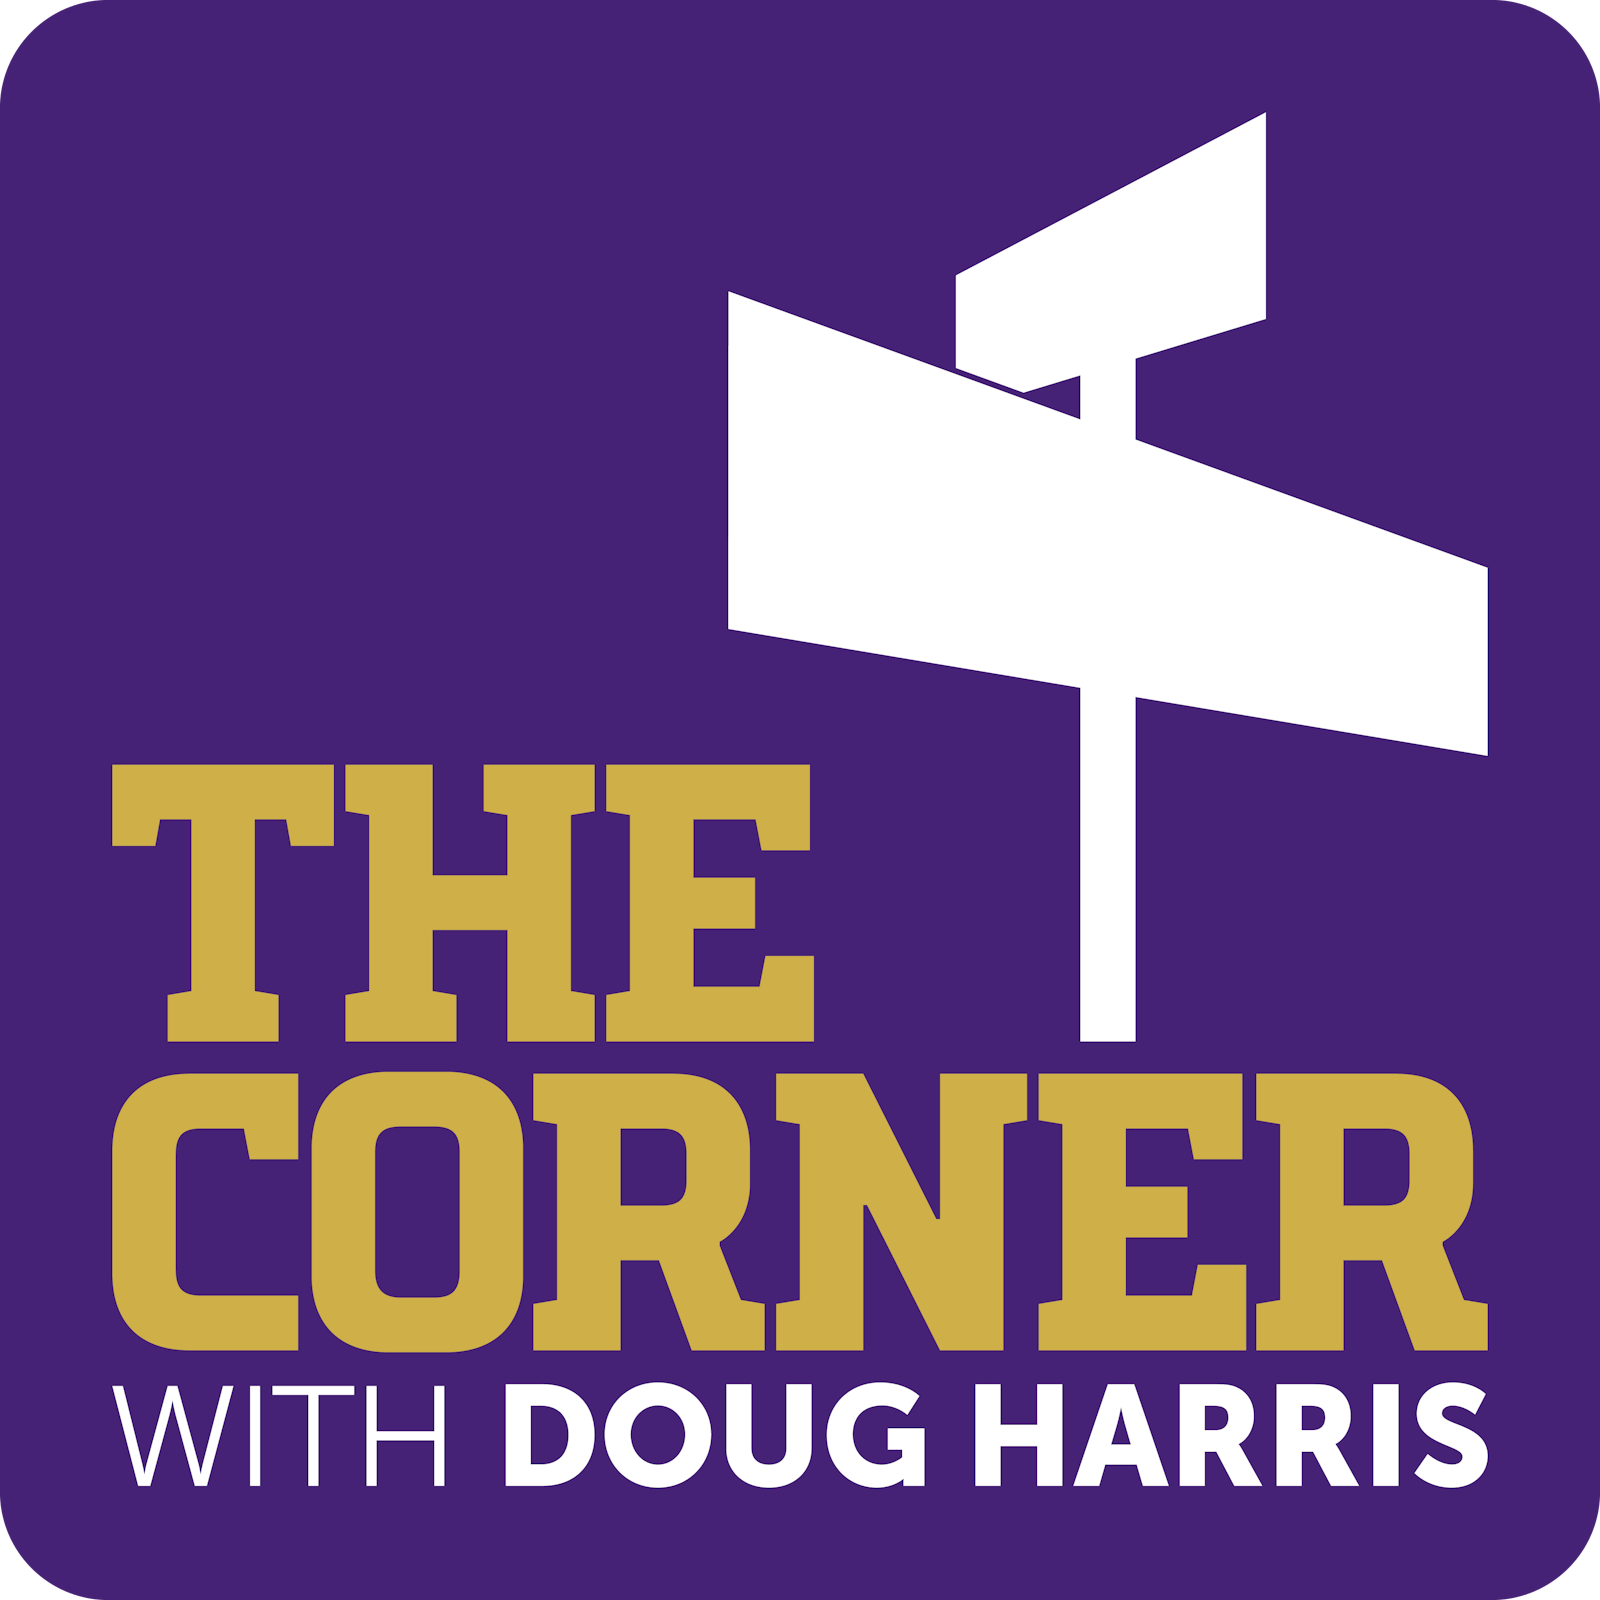 Listen to The Corner with Doug Harris!